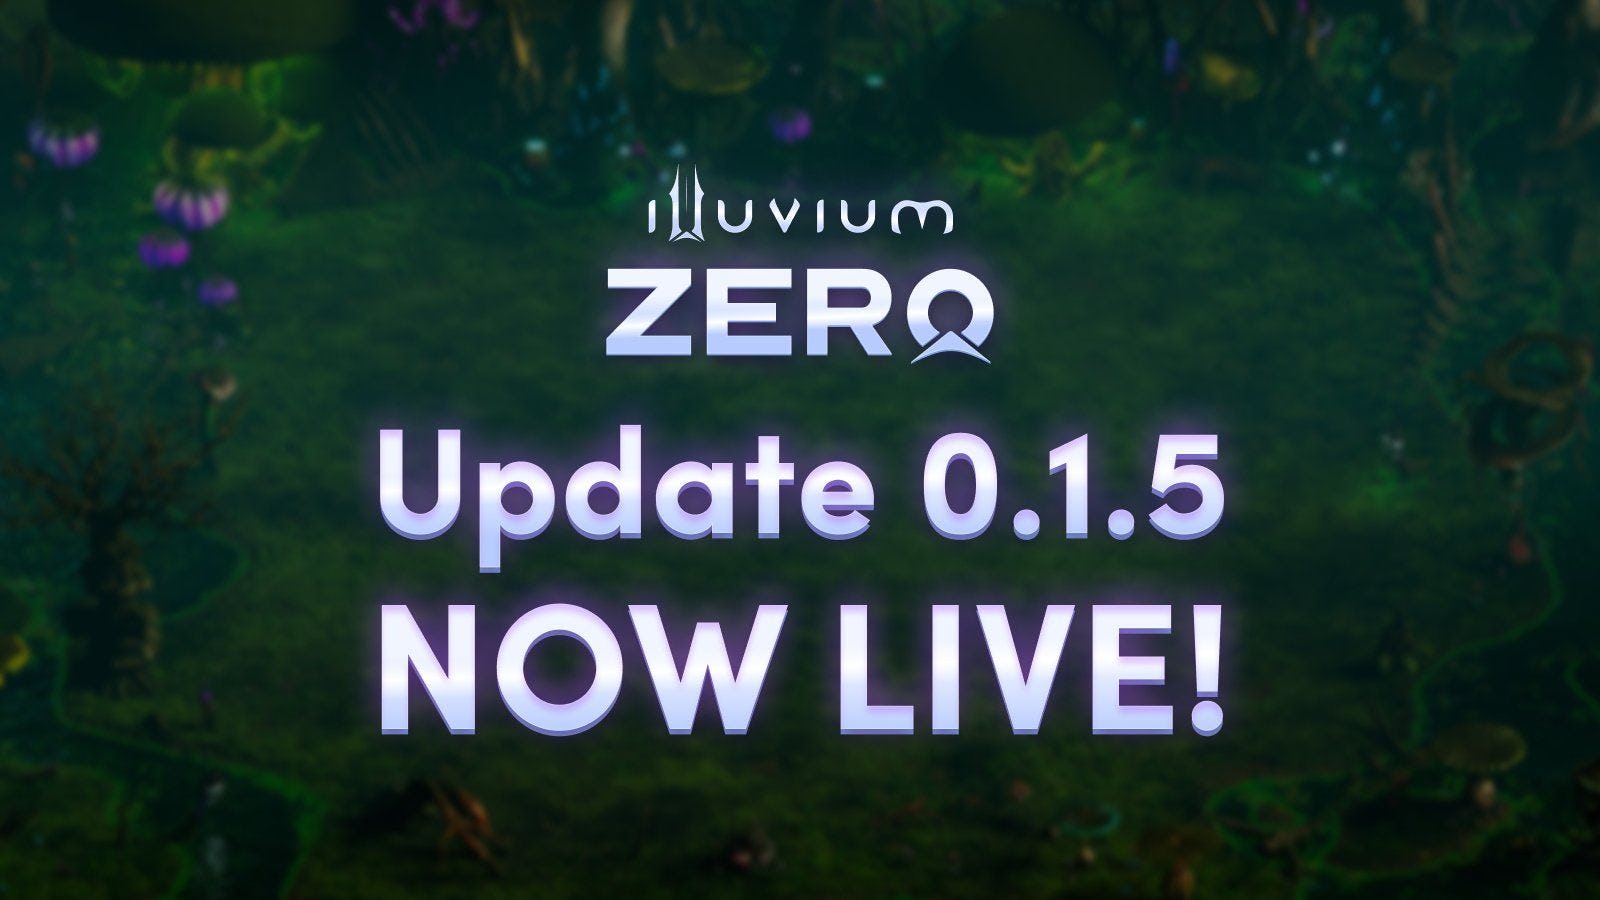 Illuvium: Zero Update 0.1.5 Brings Bug Fixes and New Features